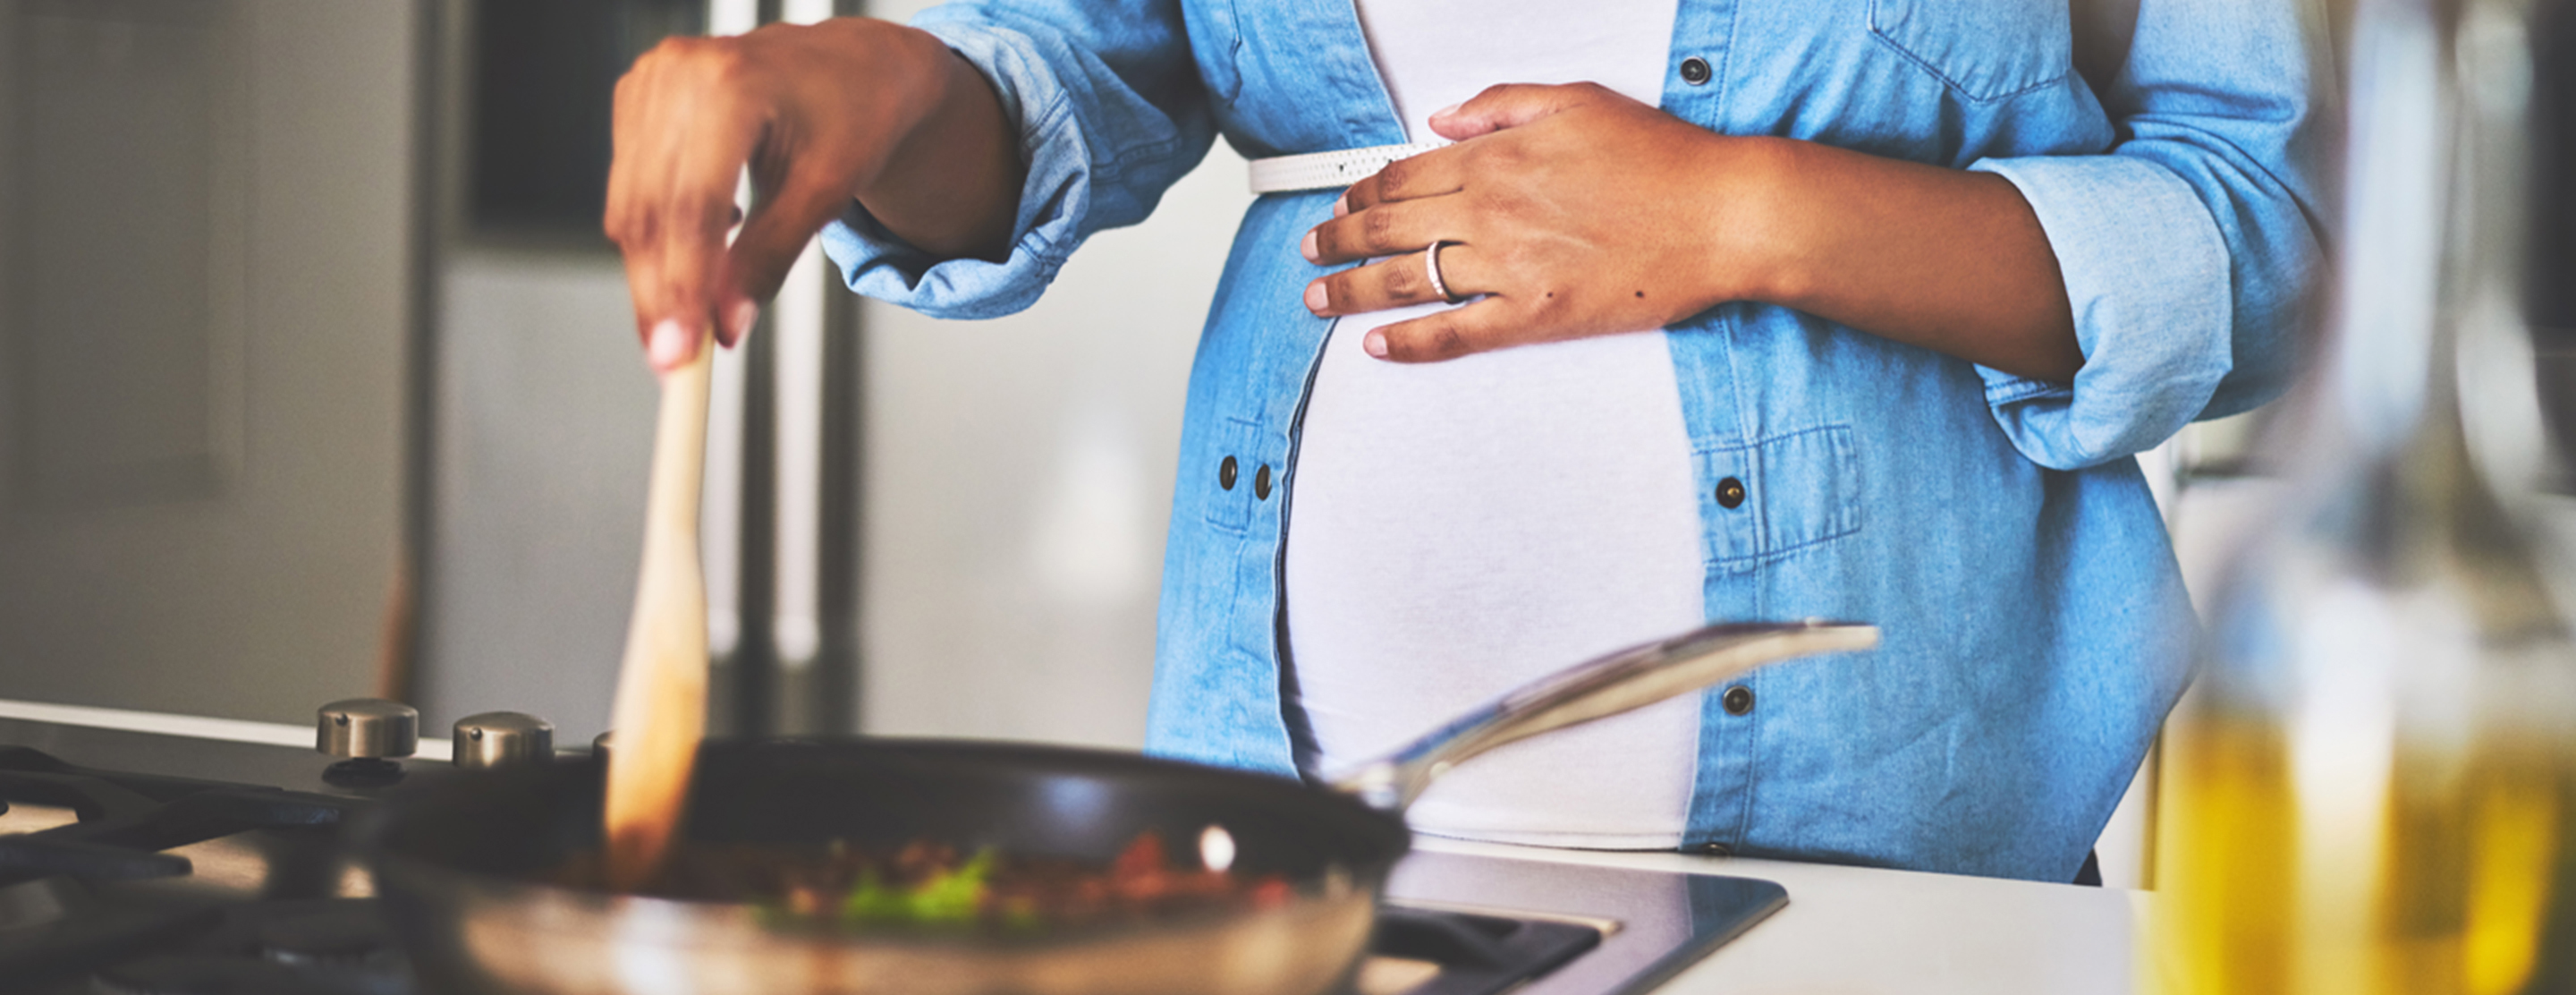 Healthy Pre-Pregnancy Diet: Effective Ways to Increase Your